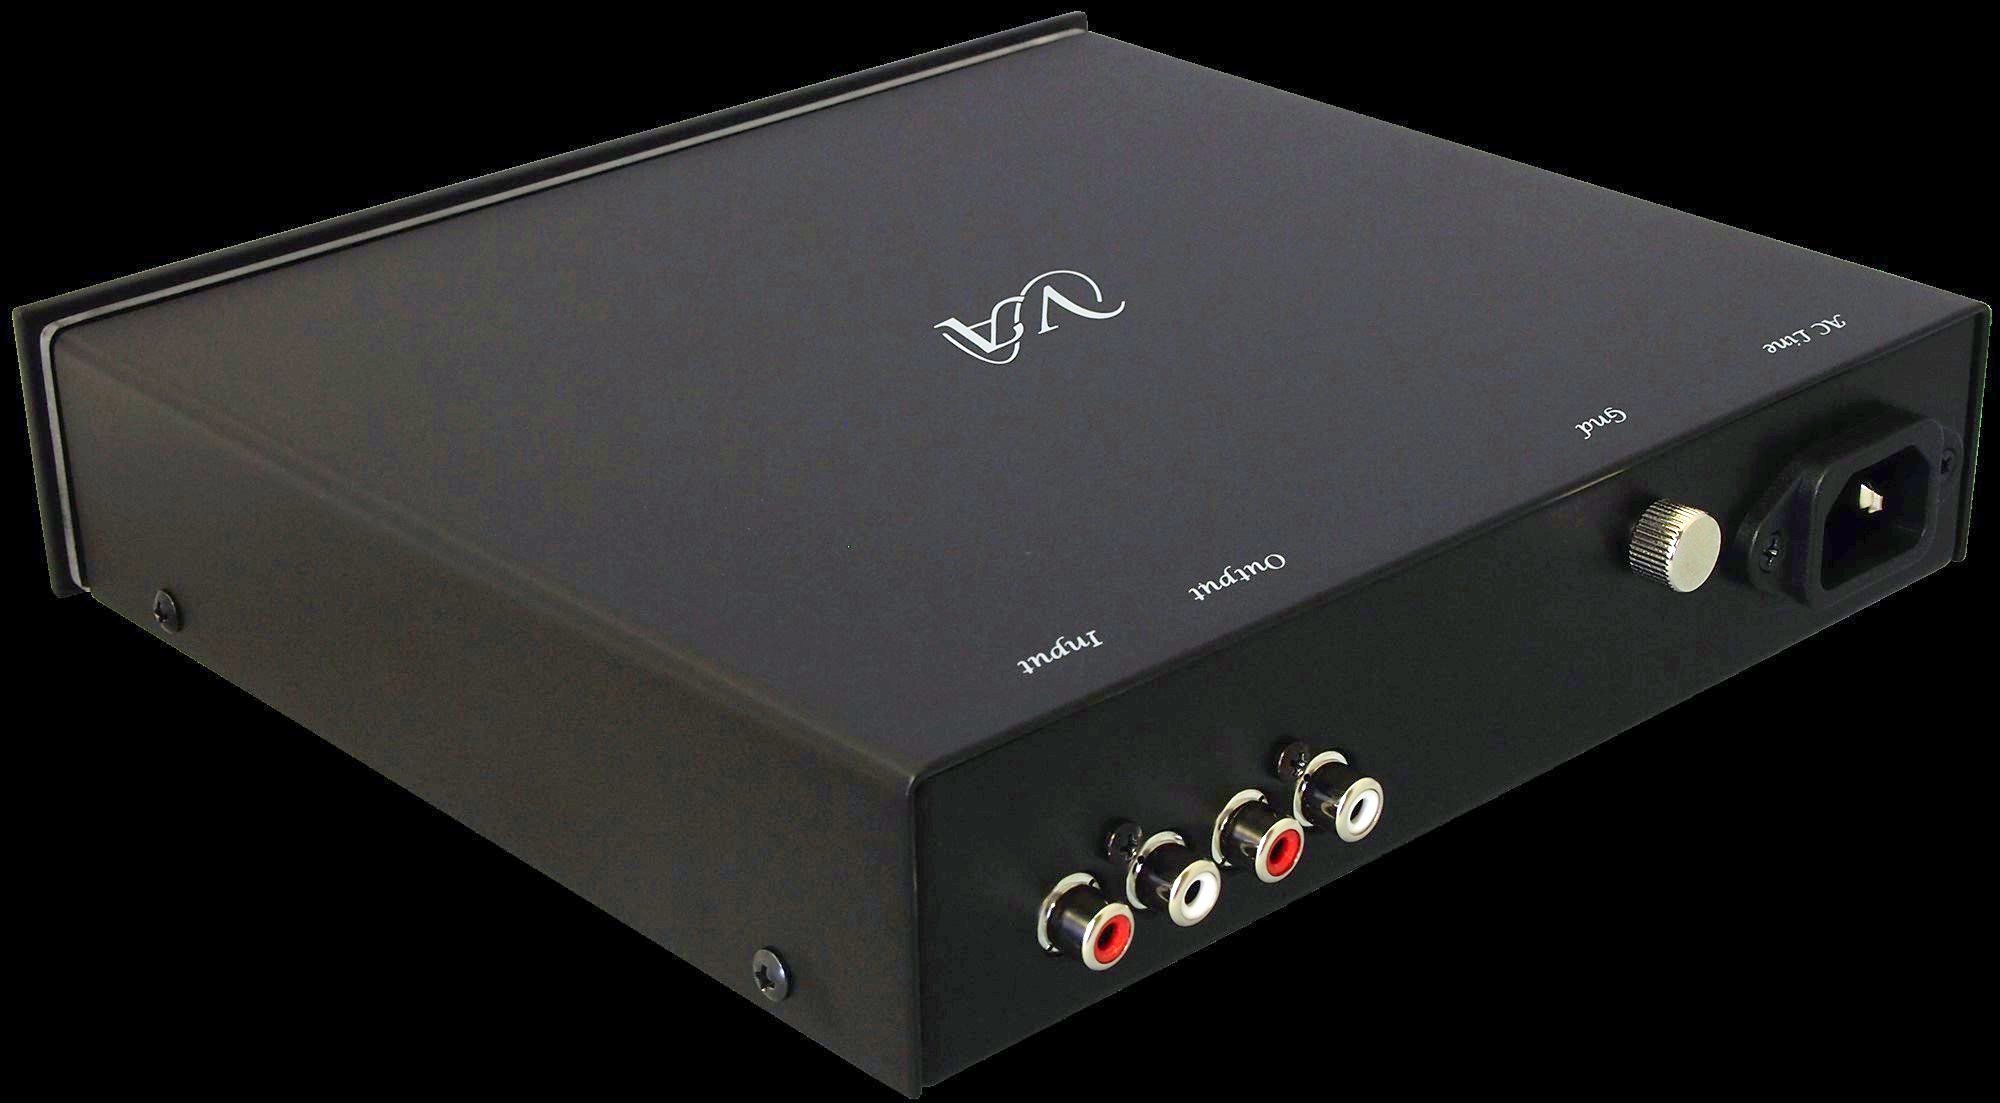 Vista Audio Phono-2